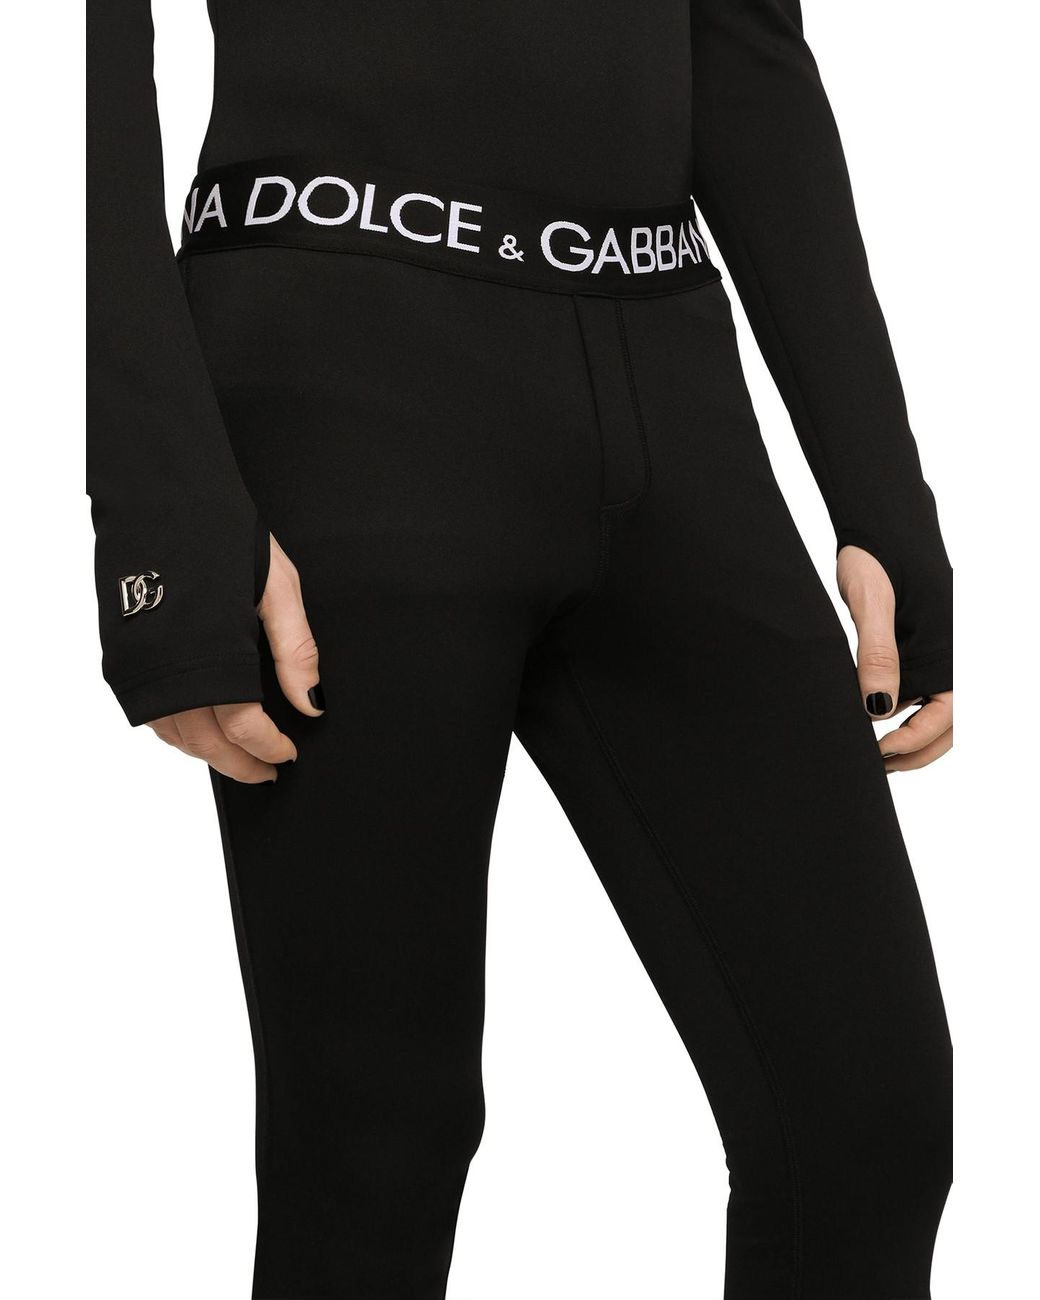 Dolce & Gabbana logo-debossed Cotton Leggings - Farfetch